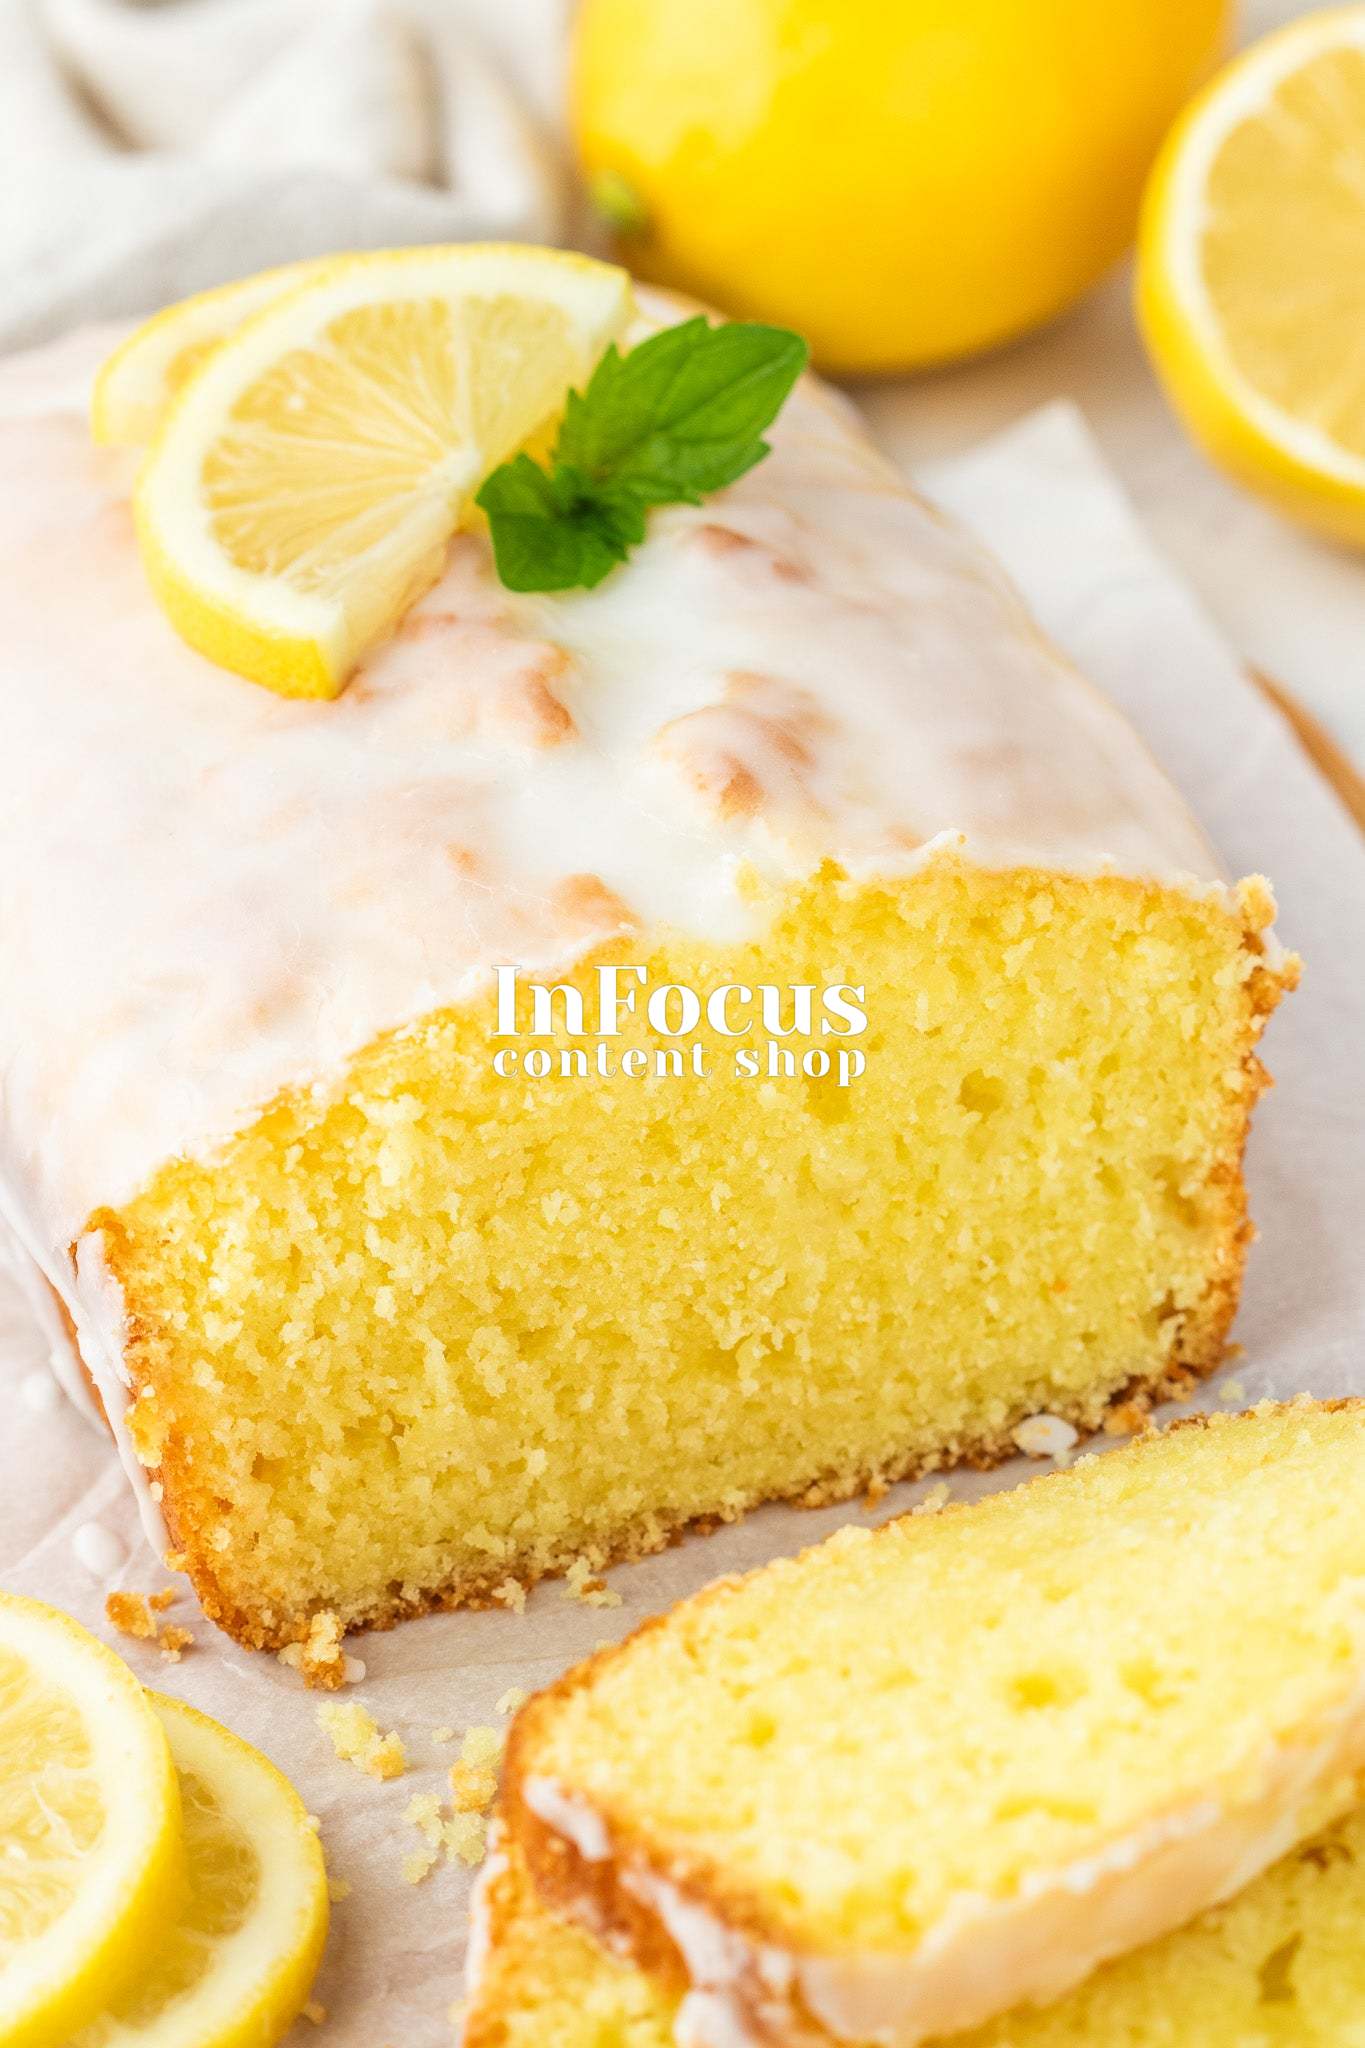 Lemon Pound Cake - Exclusive